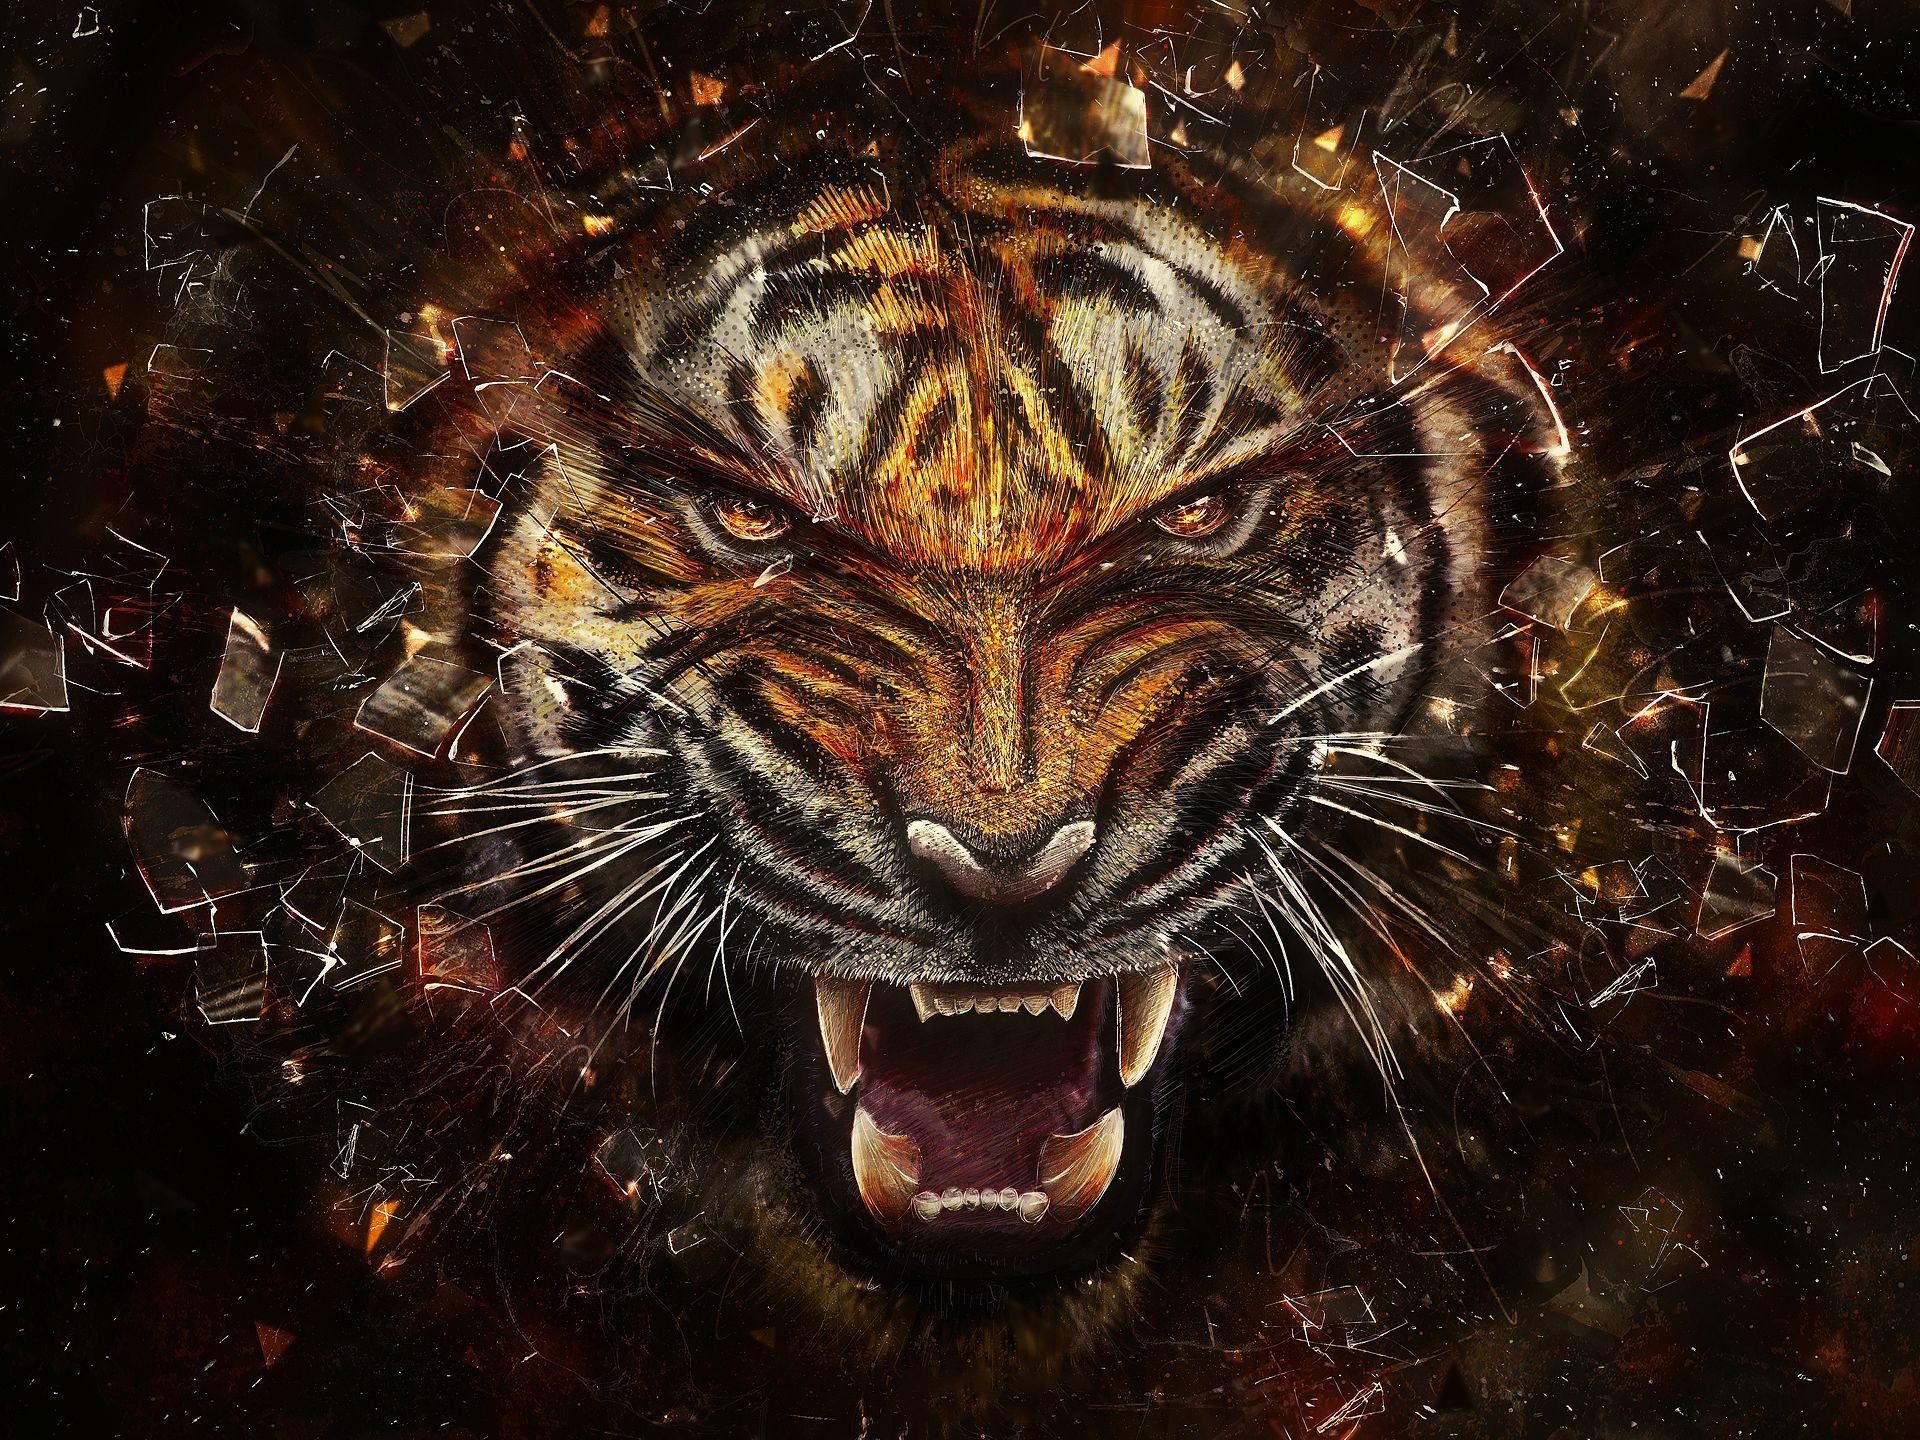 Tiger background wallpaper